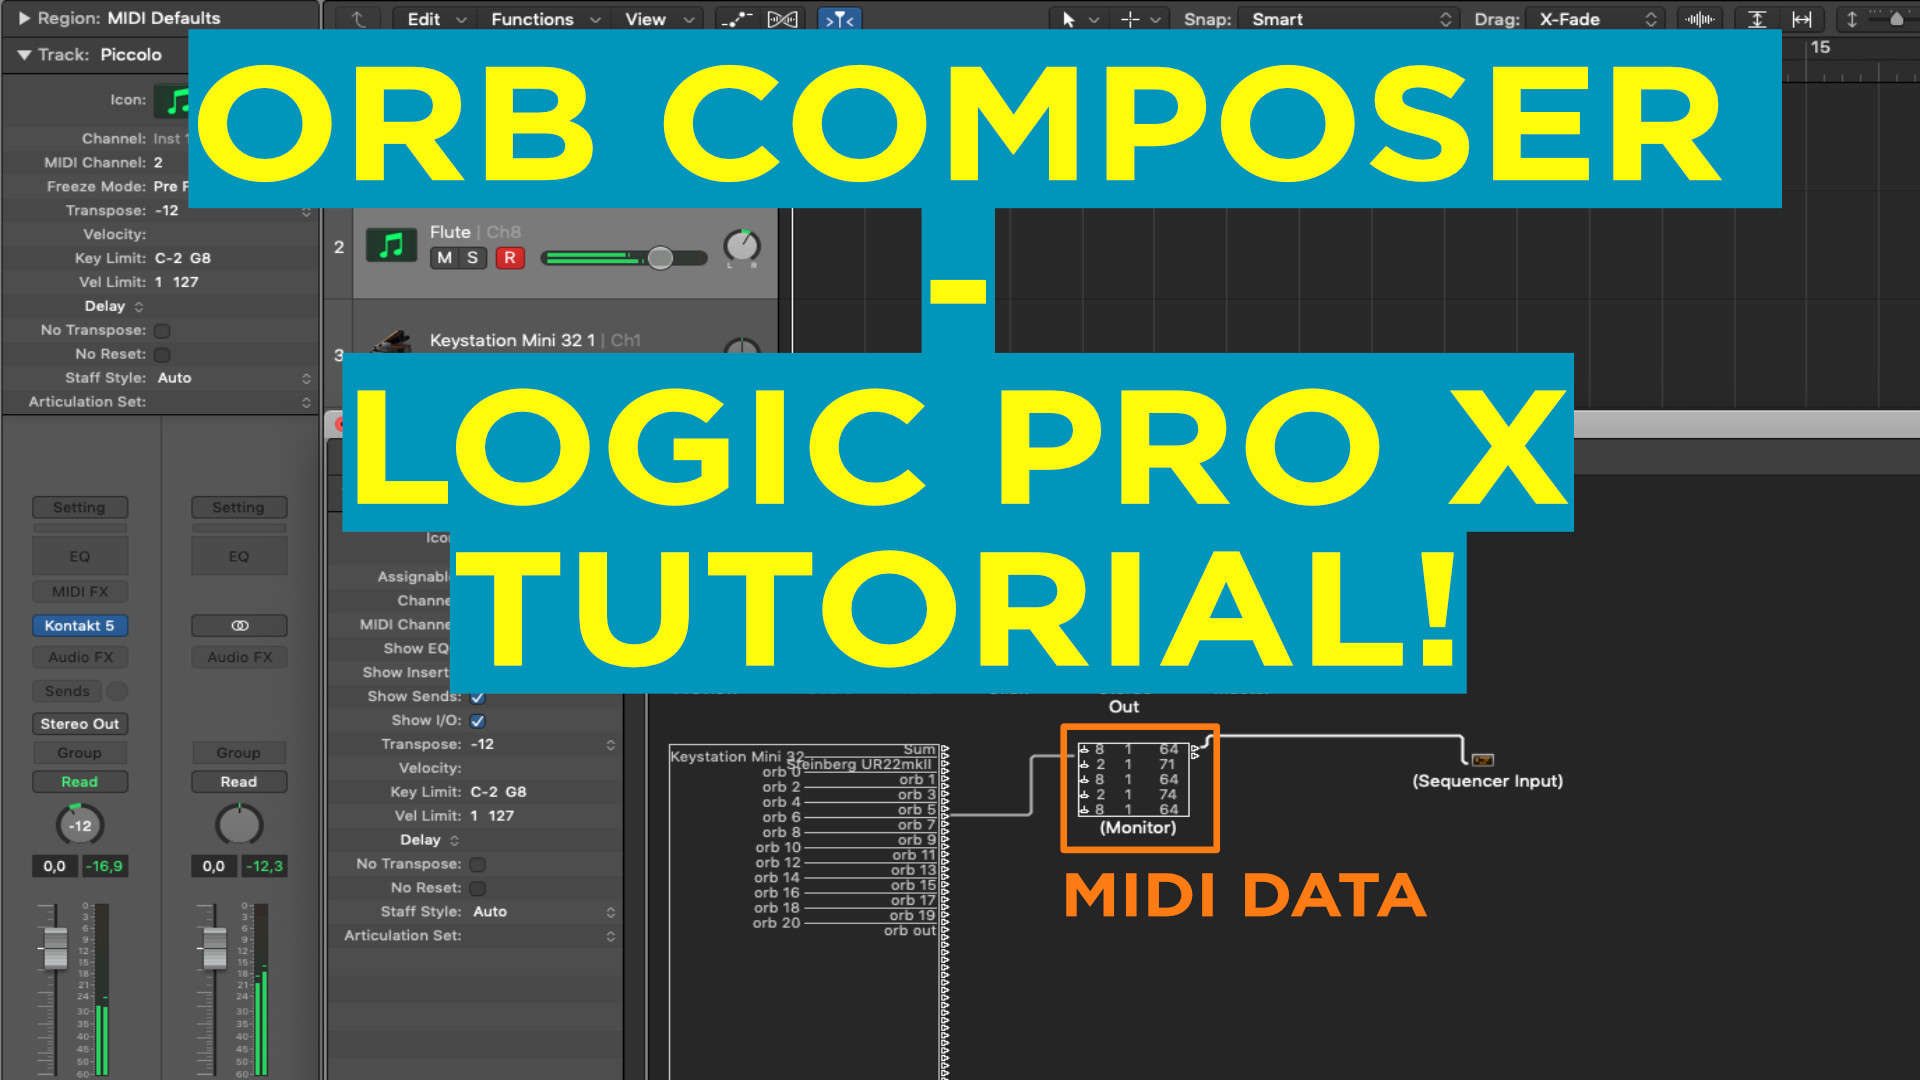 Orb Composer with Logic Pro X tutorial - Morningdew Media